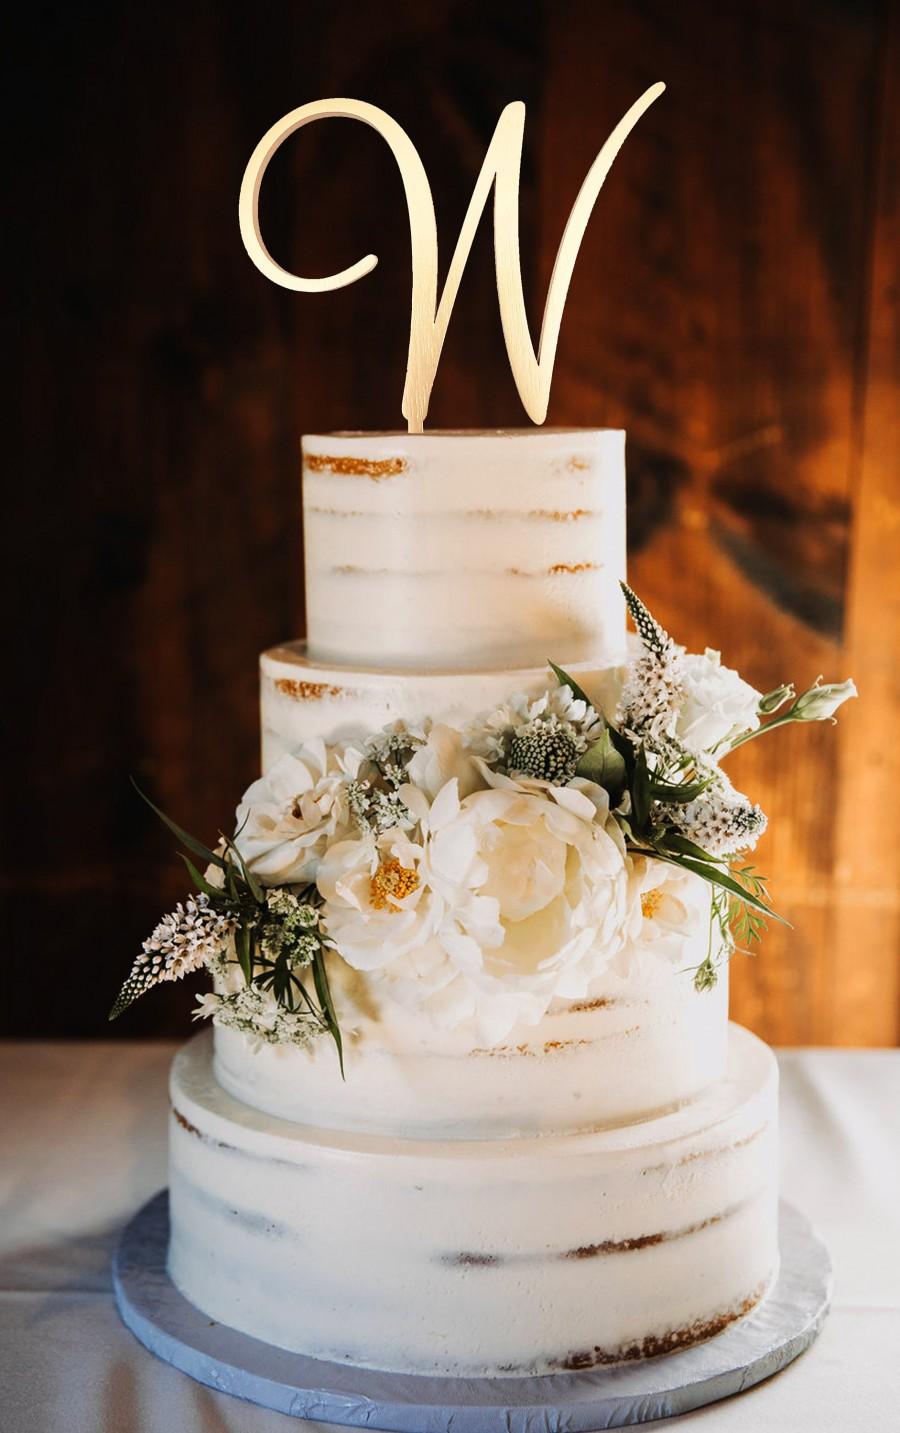 زفاف - W Cake Topper Wedding Cake Topper Gold Personalized Cake Topper w Custom Personalized Wedding Cake Topper initial wedding cake toppers w